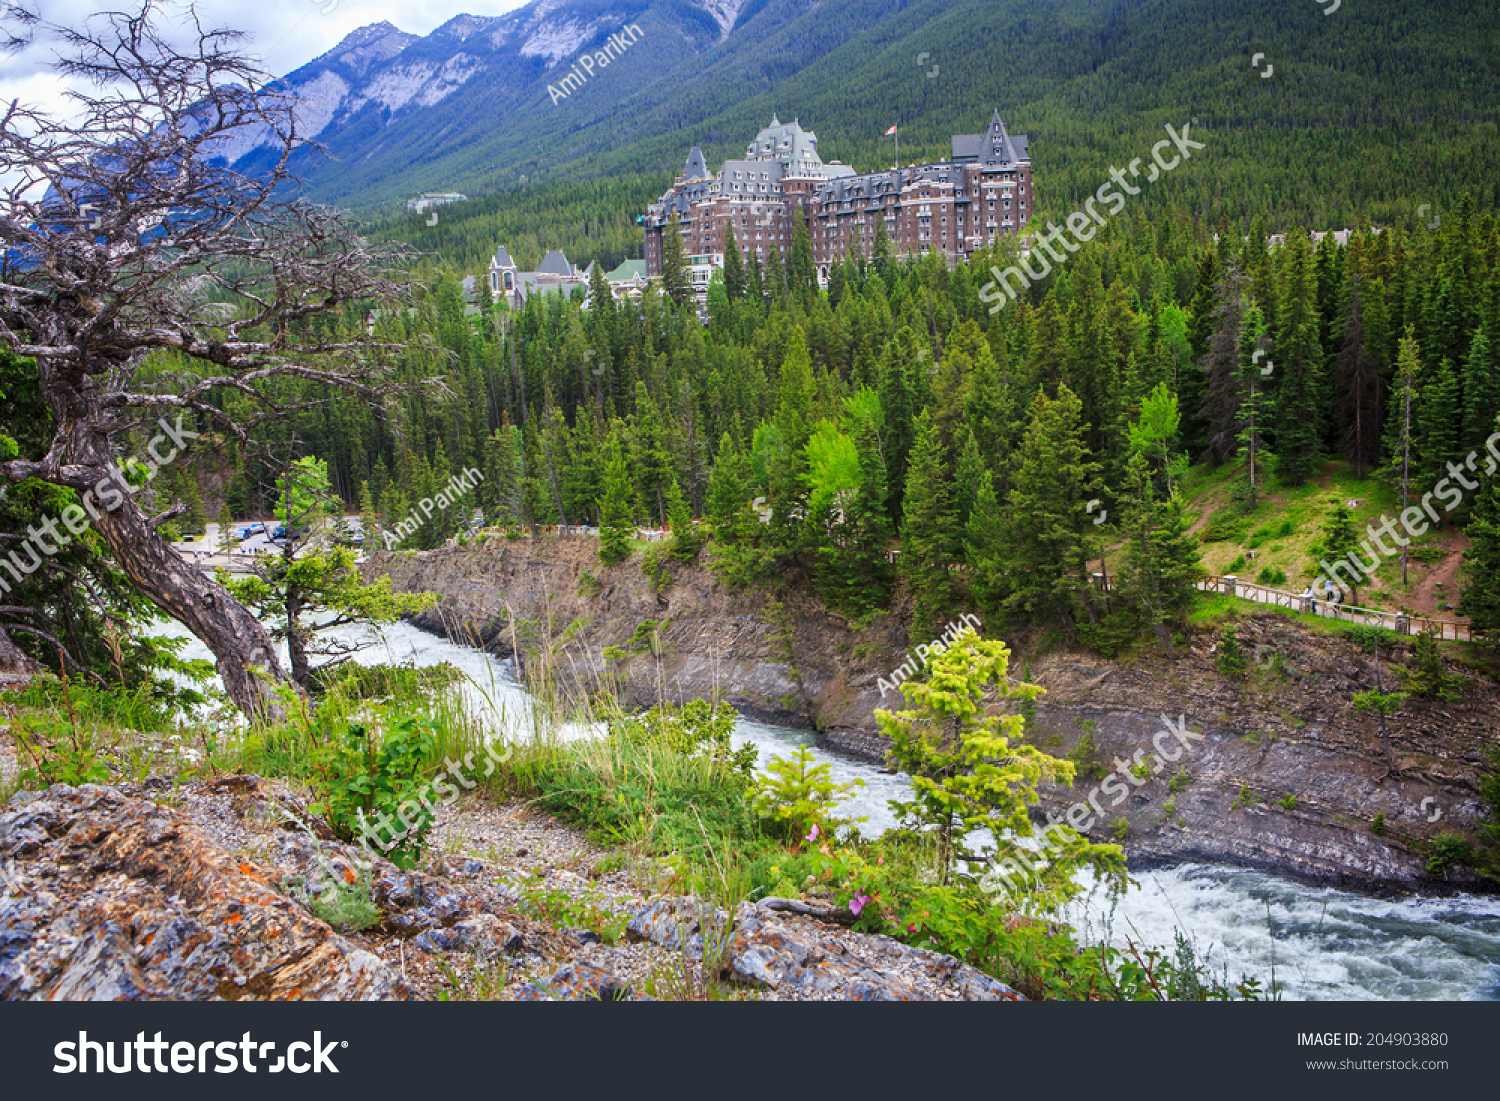 Fairmont Banff Springs Hotel Canadian Rockies Stock Photo Edit Now 204903880